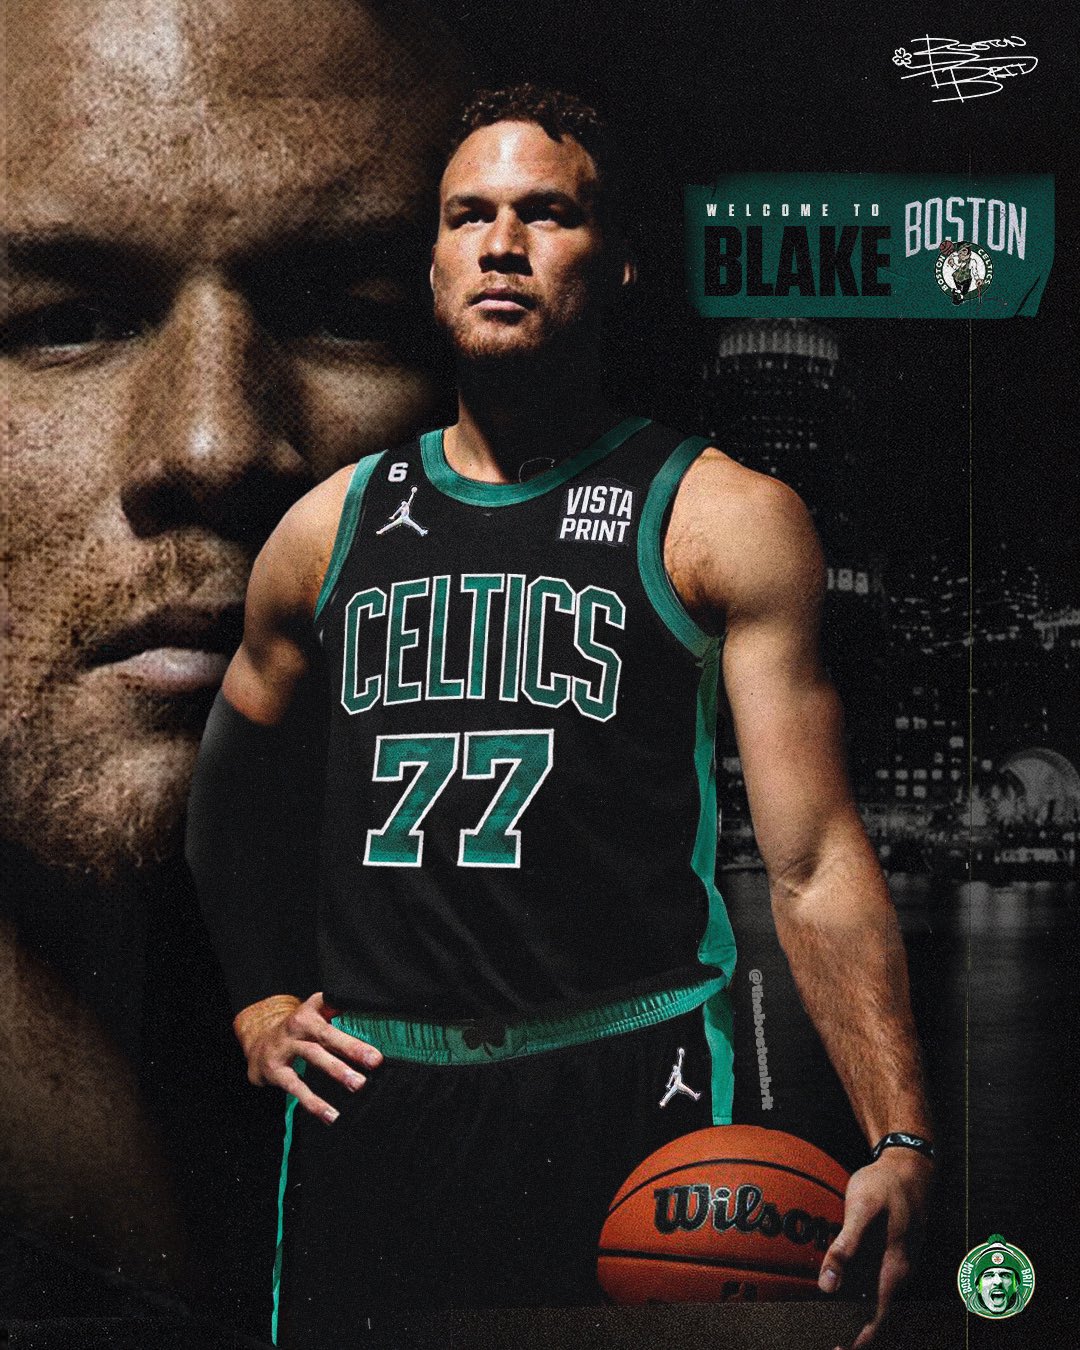 Boston Celtics UK☘️ (The Boston Brit) to Boston ☘️ #Celtics